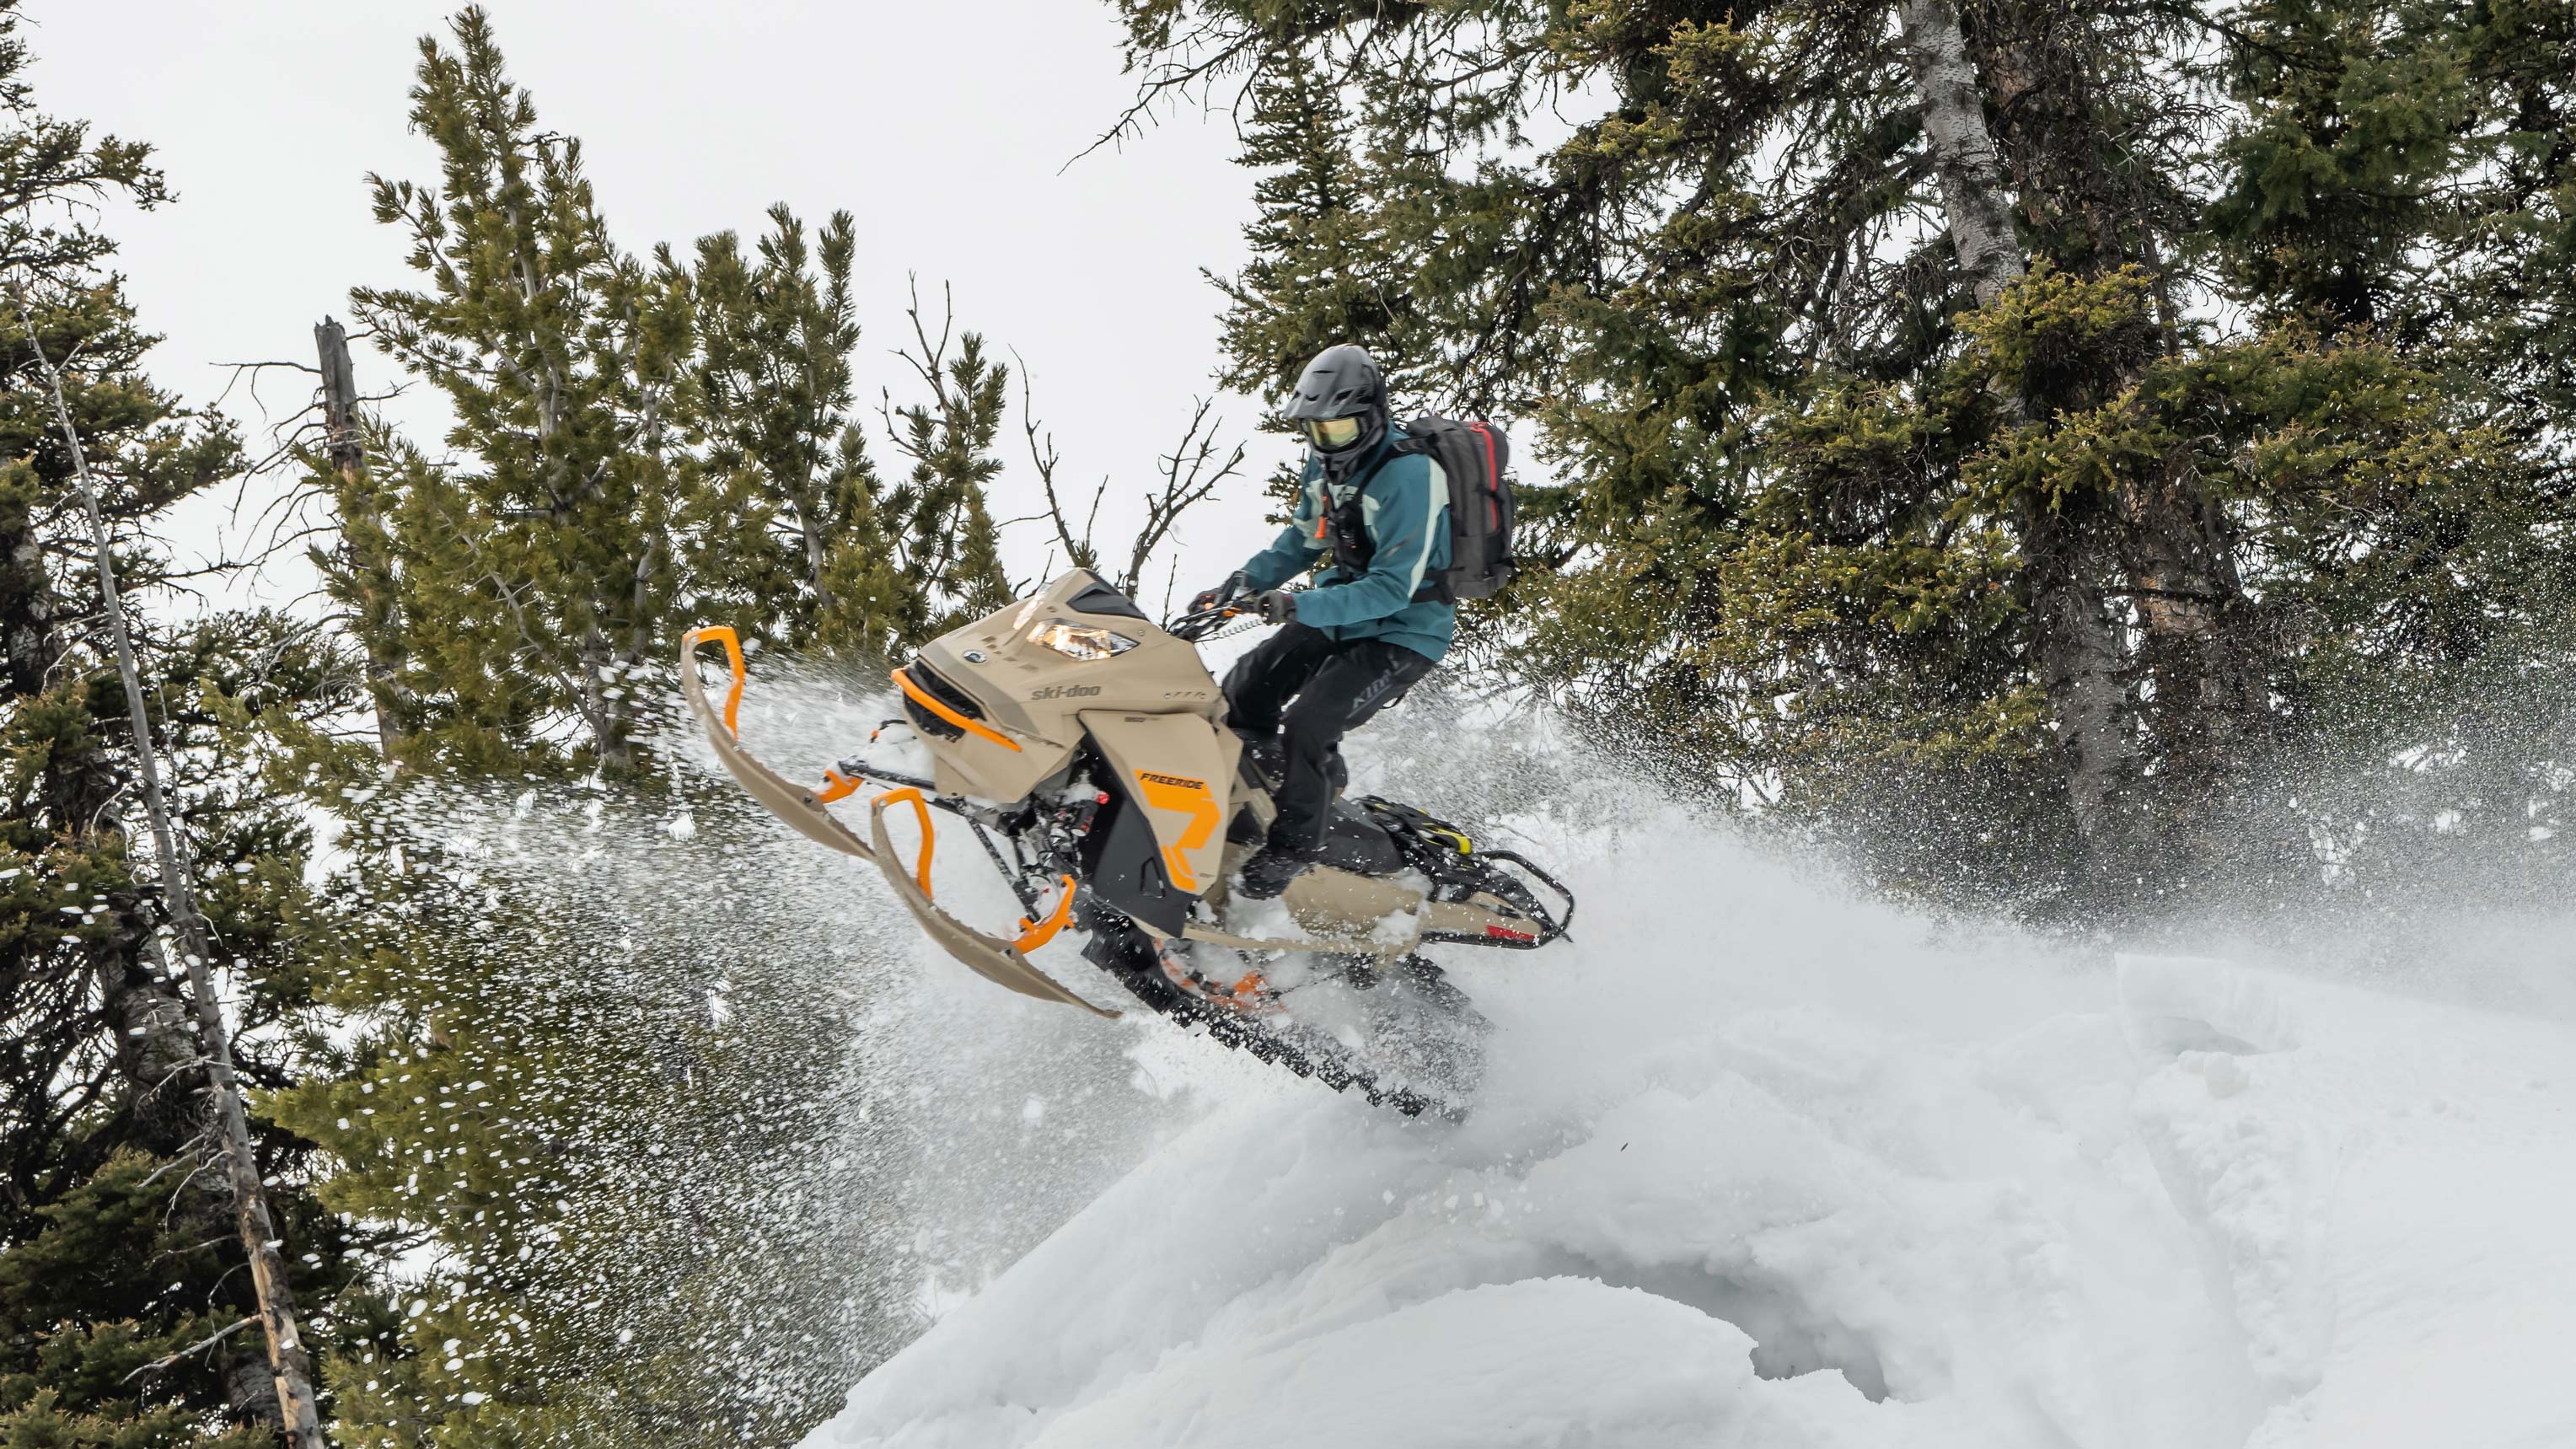 Ski-Doo Ambassador Mason Rutledge jumping with a Freeride